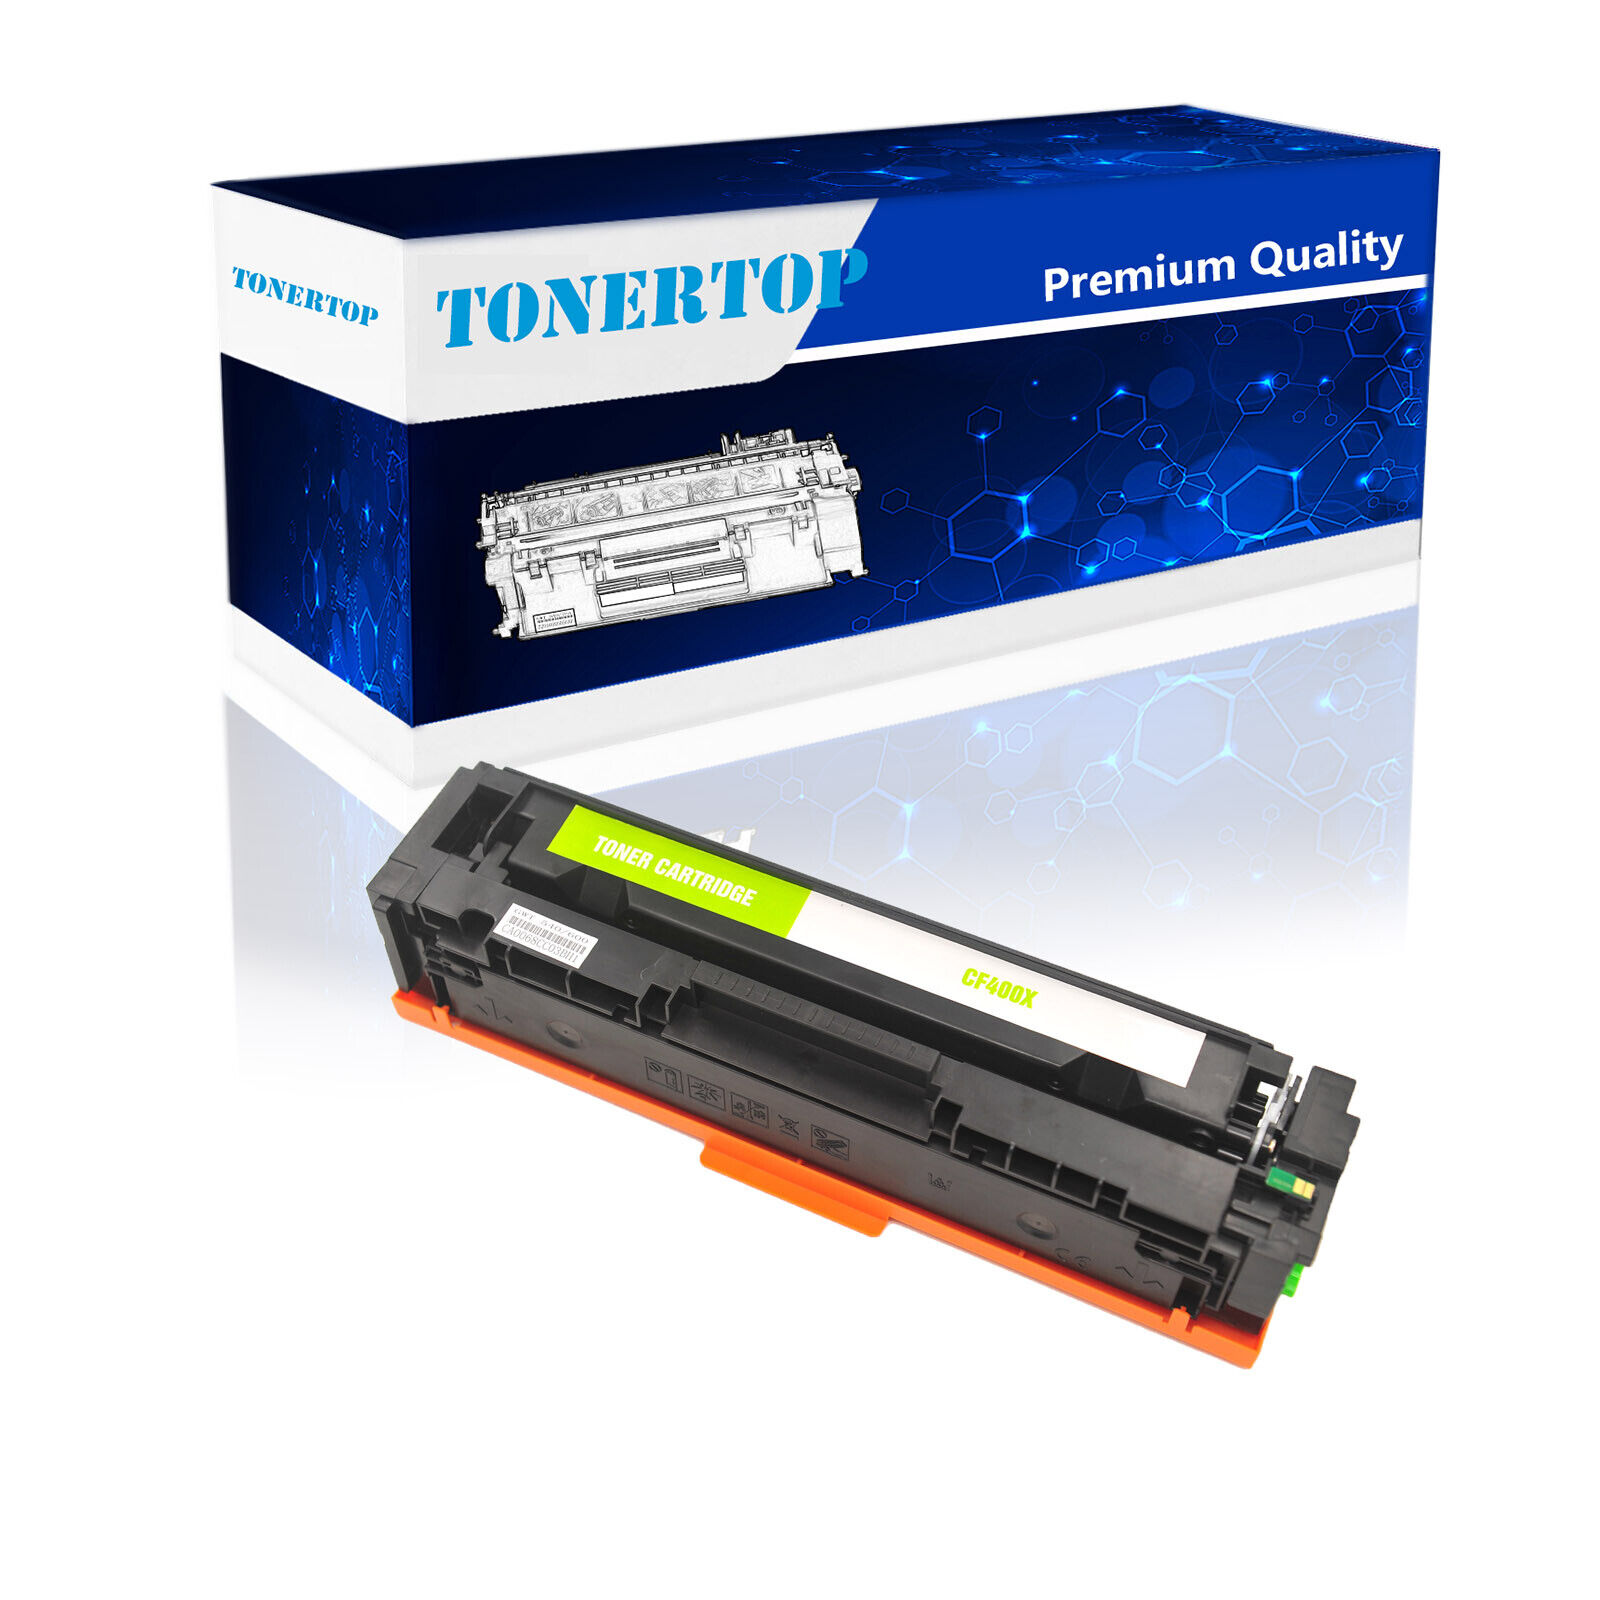 Toner Cartridge CF400X 401X 402X CF403X For HP 201X Color LaserJet MFP M277 Lot